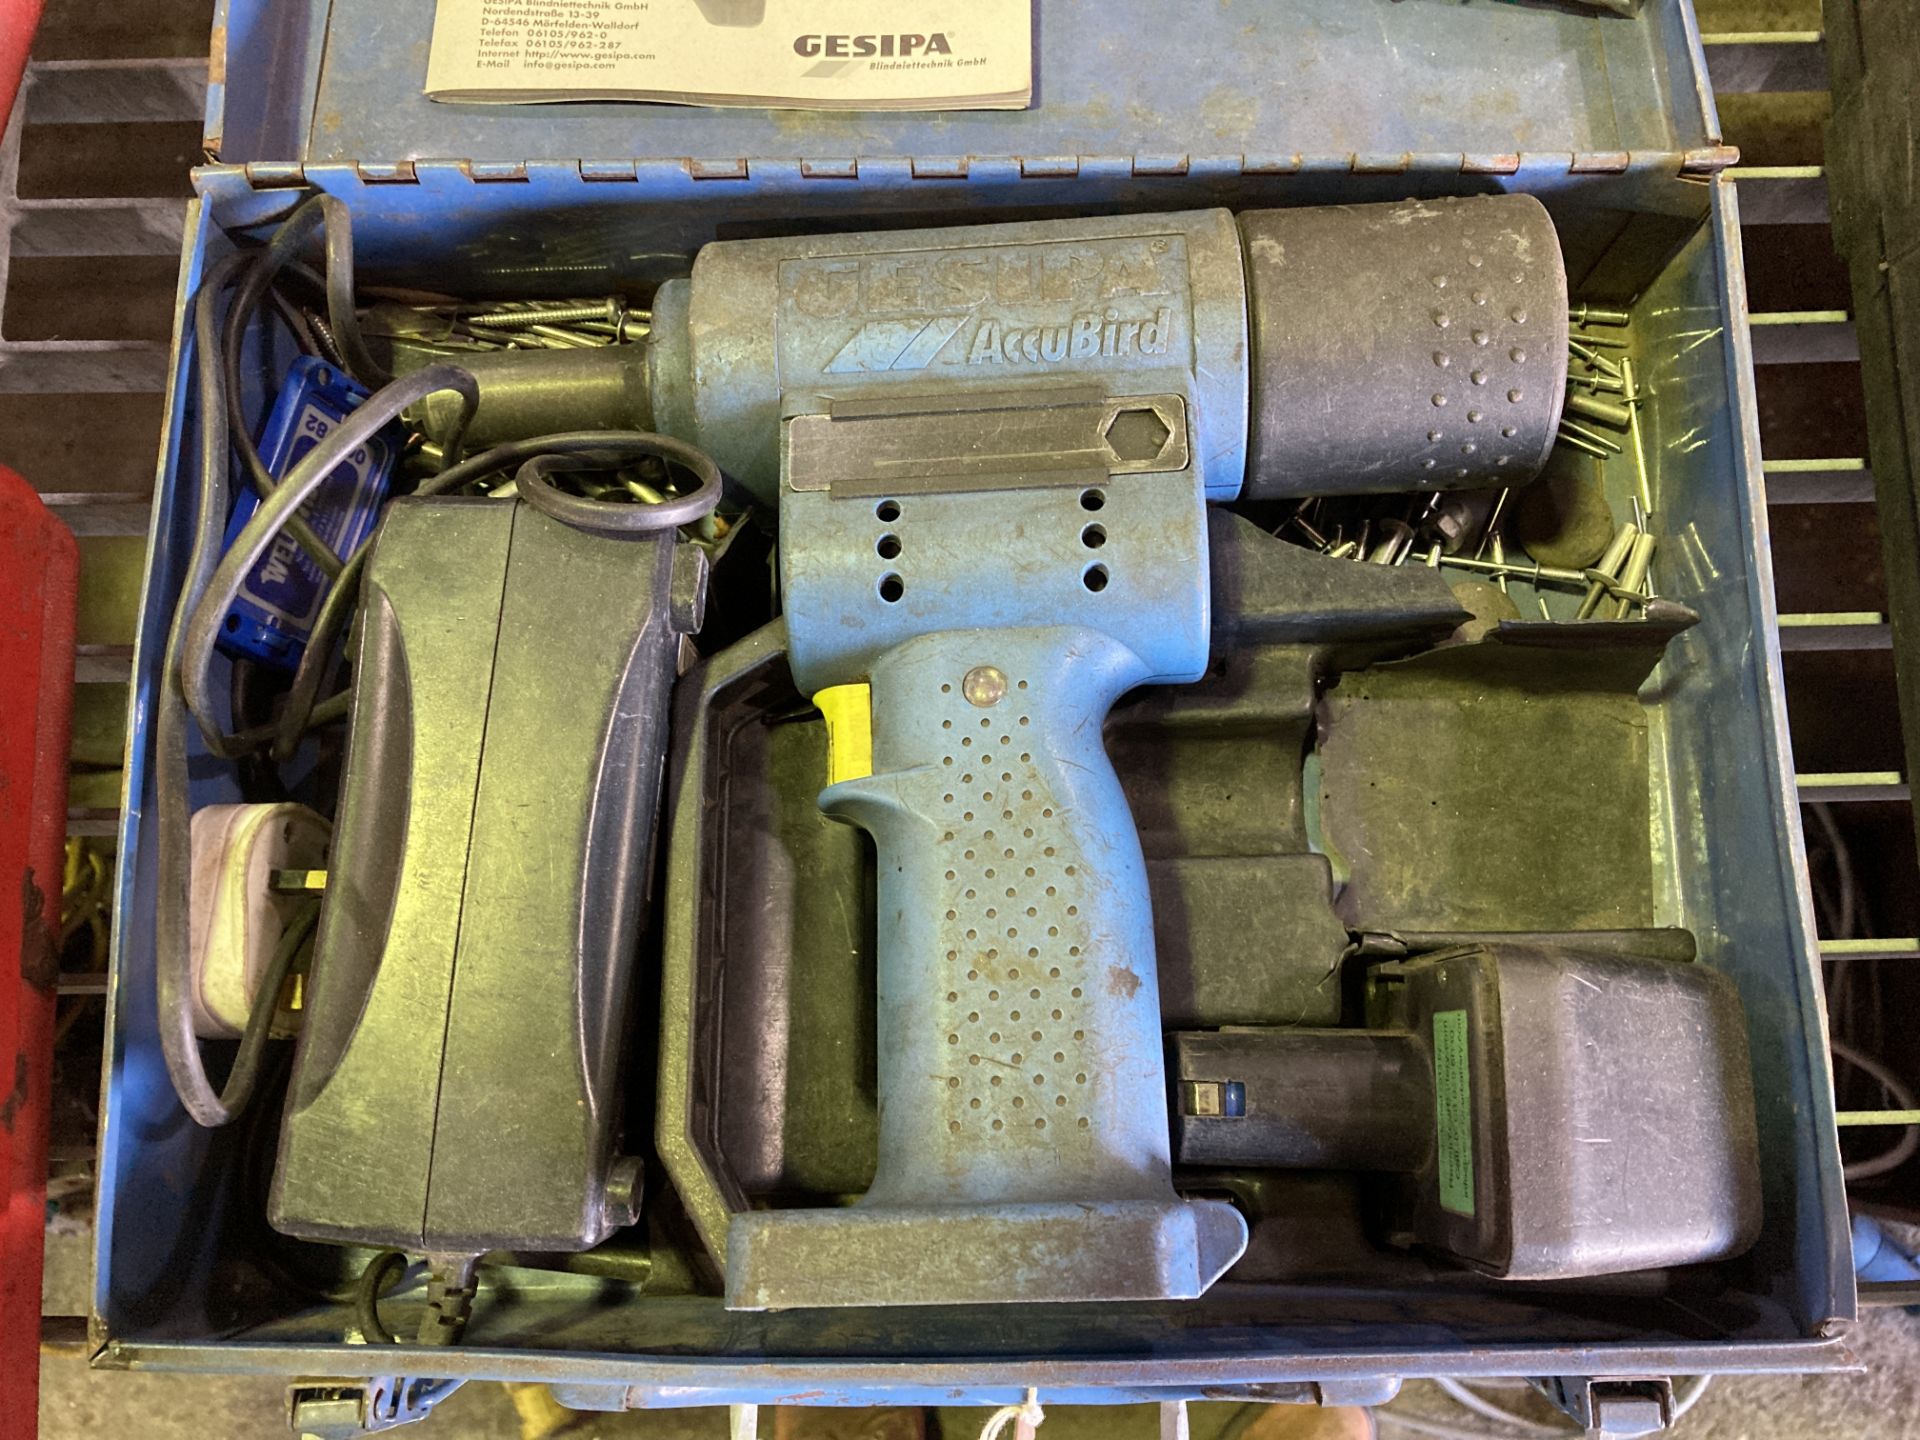 Gesipa Accubird cordless pop rivet gun in case - Image 2 of 3